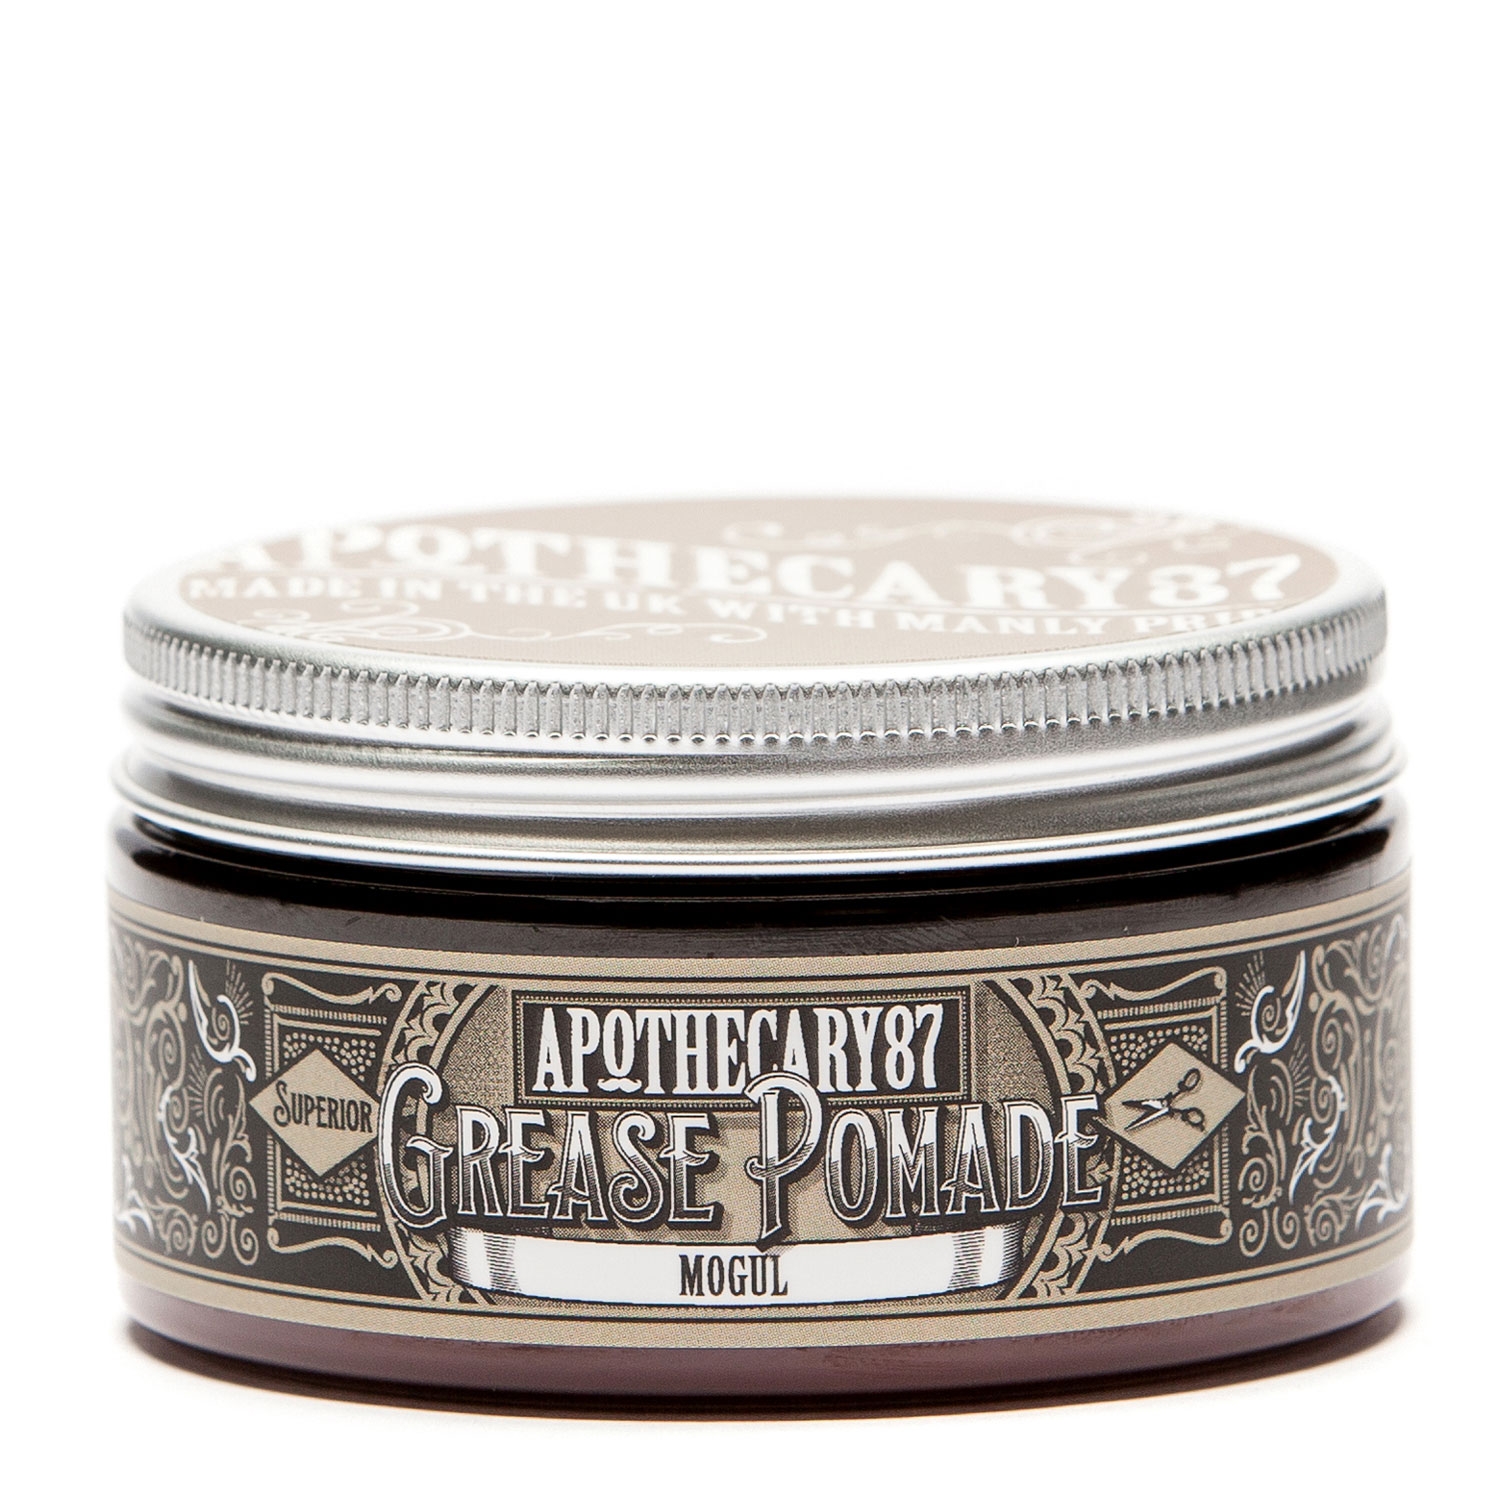 Image du produit de Apothecary87 Grooming - Grease Pomade Mogul Fragrance